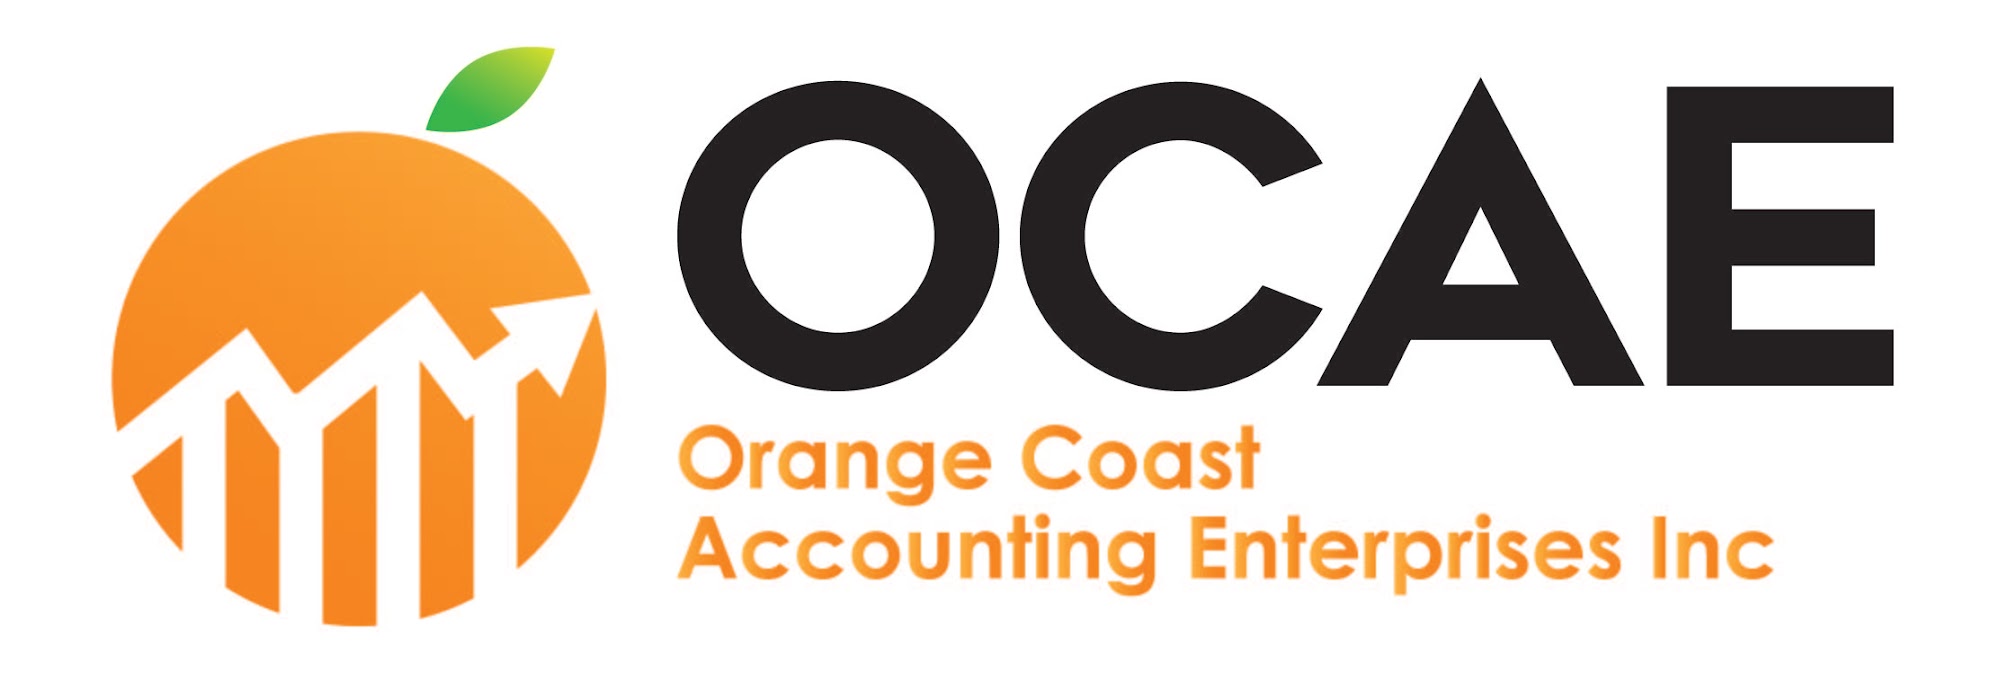 Orange Coast Accounting Enterprises Inc.